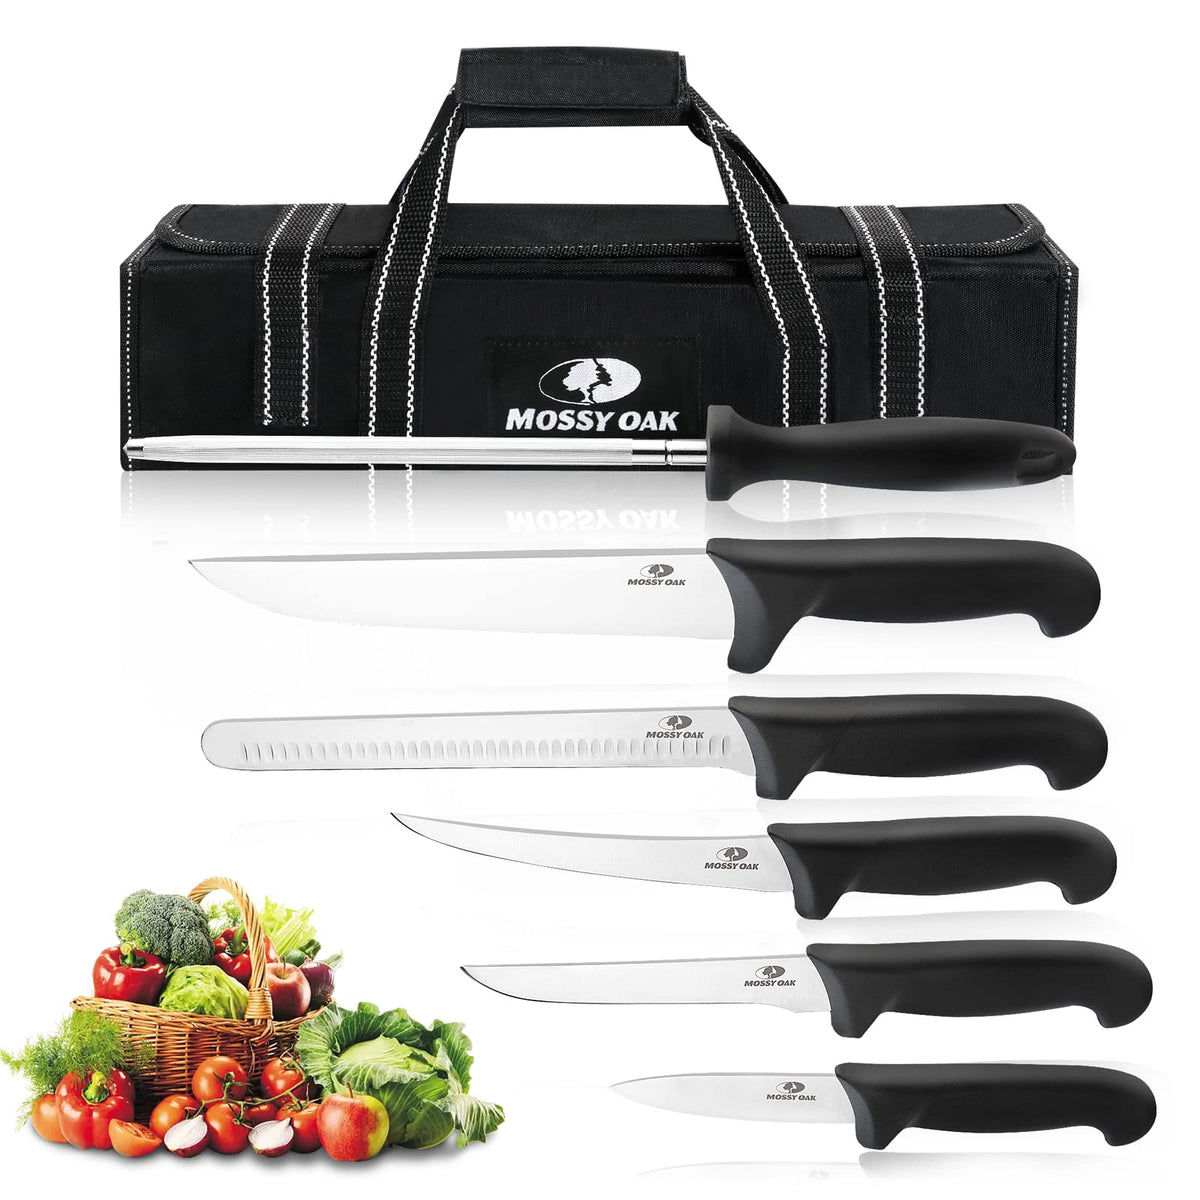 10-Piece Stainless-Steel Kitchen Knife Set - Newly Innovative Knifes Set with Utensil Holder - 5 Stainless-Steel Knives - Knife Sharpener - Kitchen